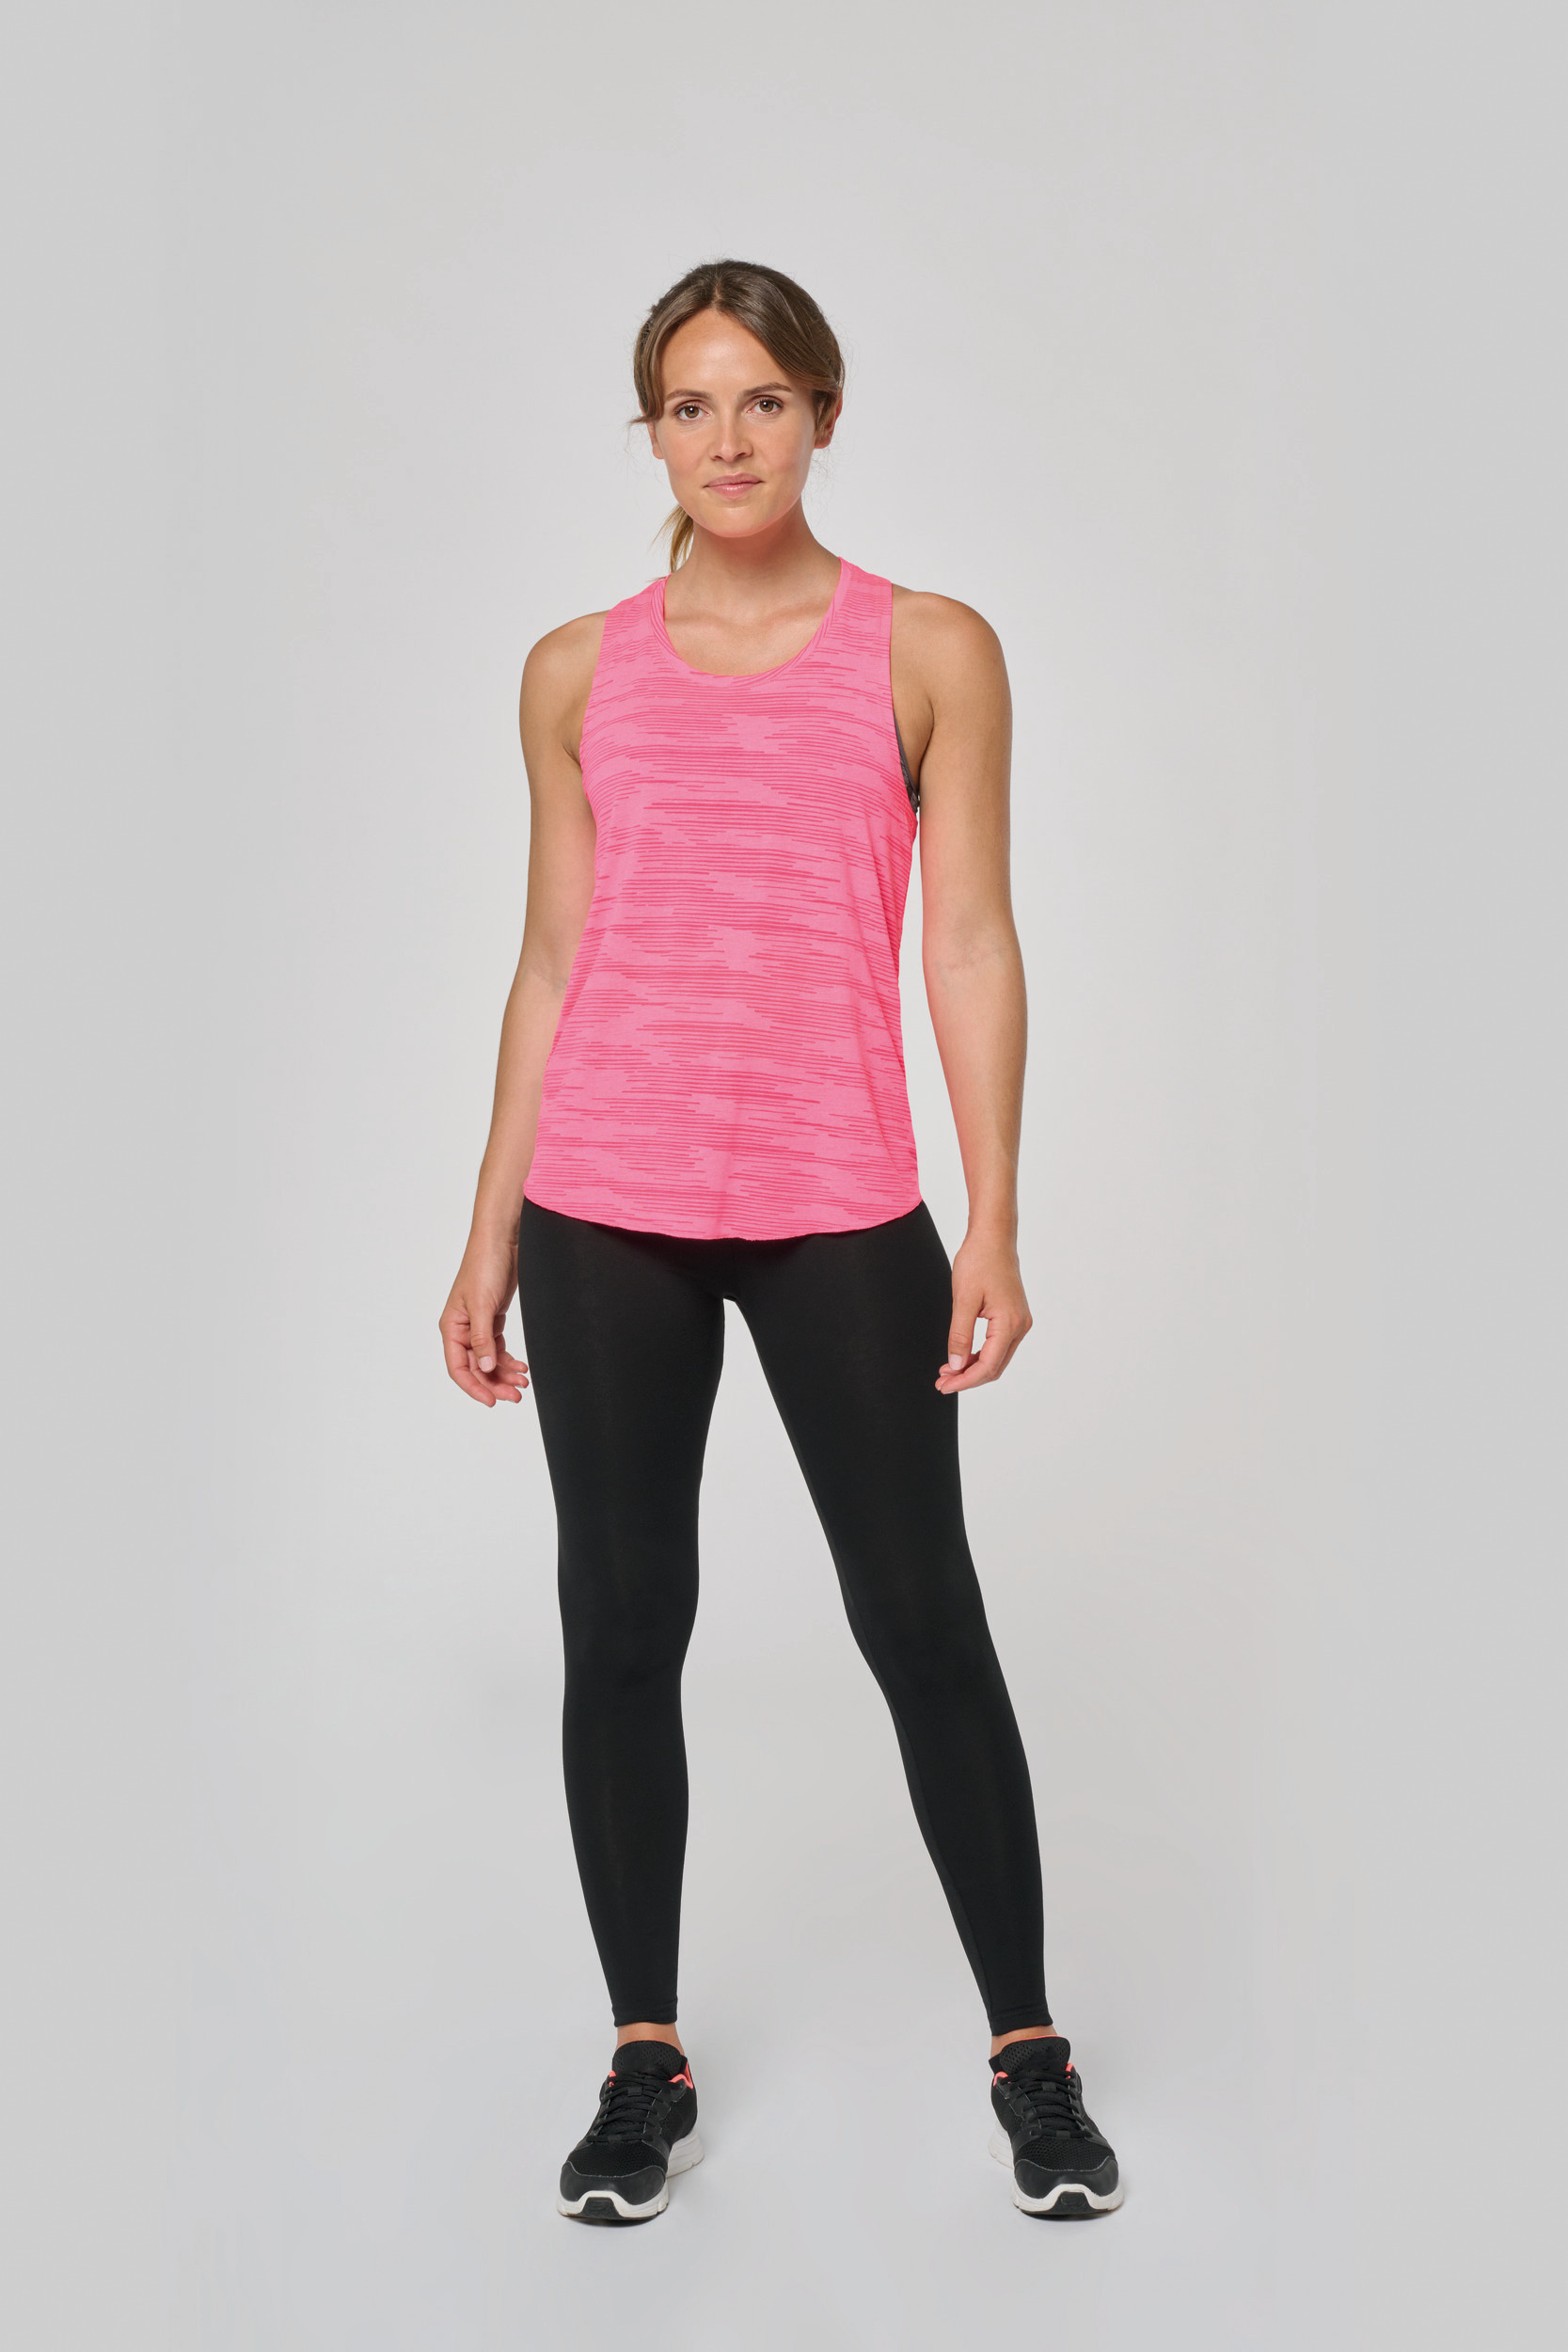 Camiseta Yoga Girl Unisex  Ropa de gimnasia, fitness y deportes